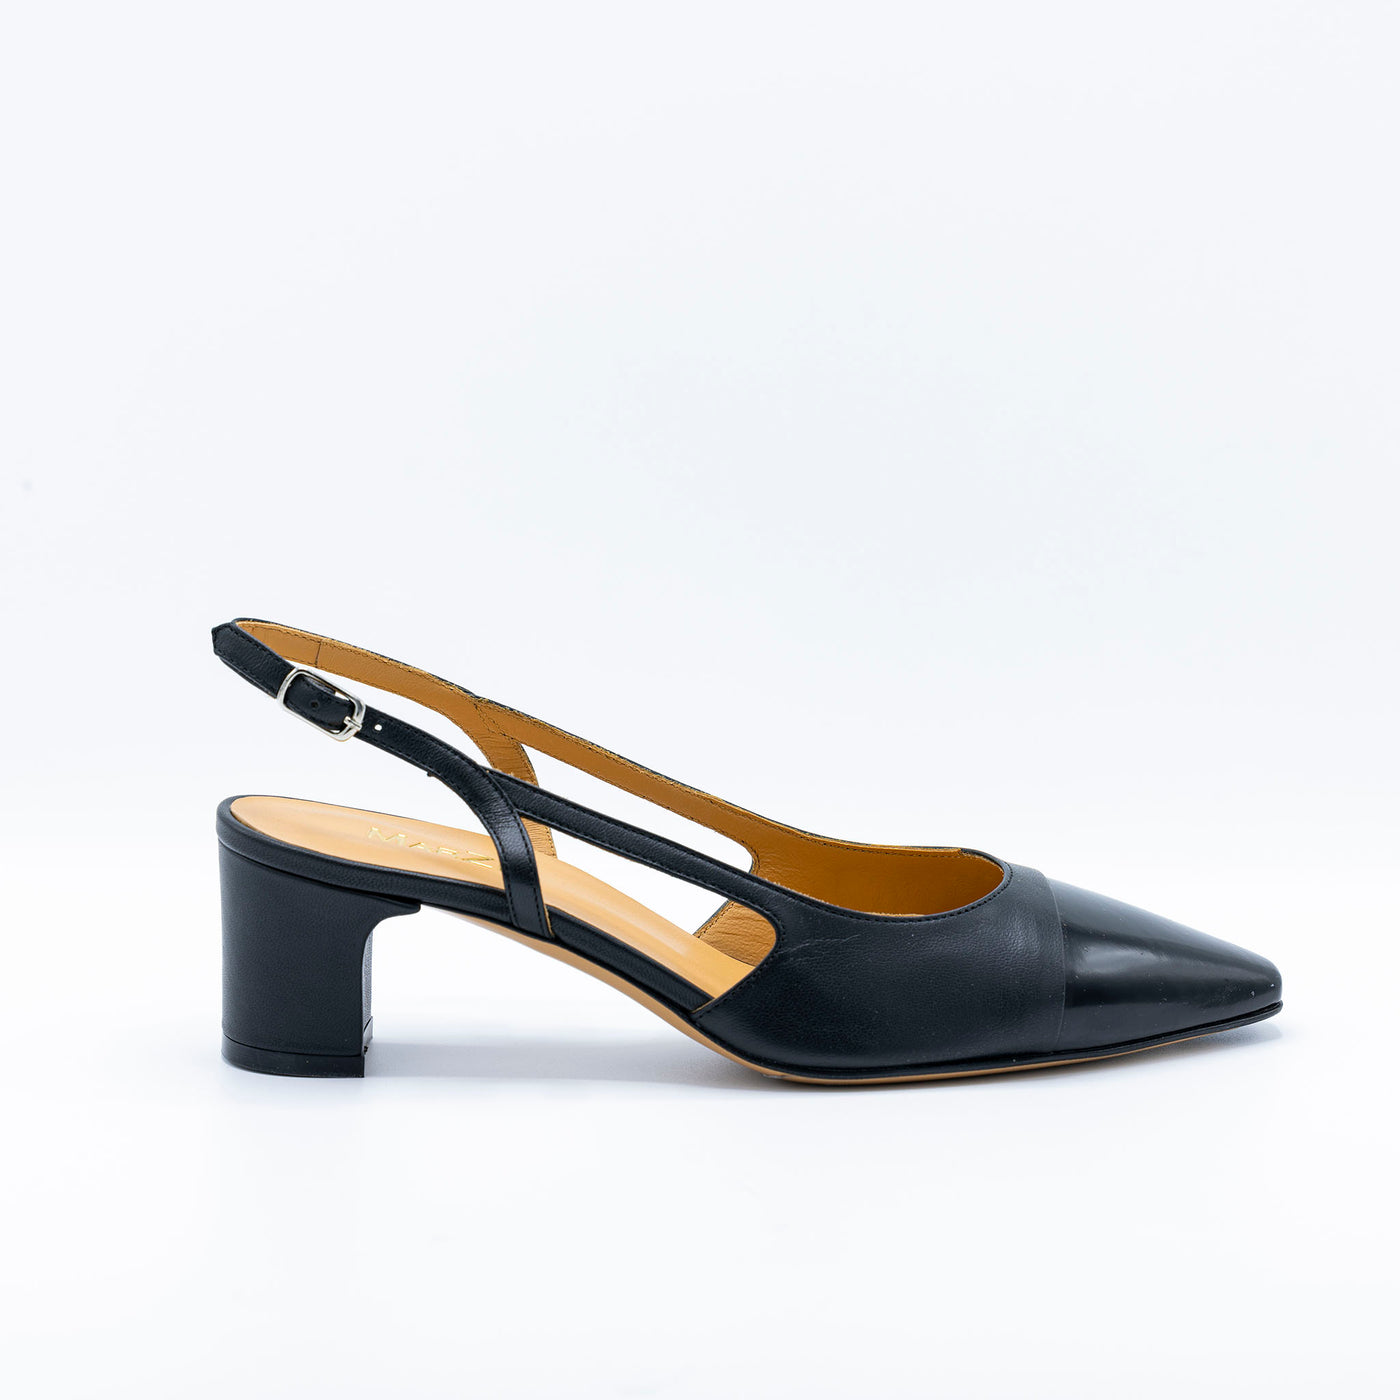 Black two-toned slingback with cap toe. Slingback heel. 